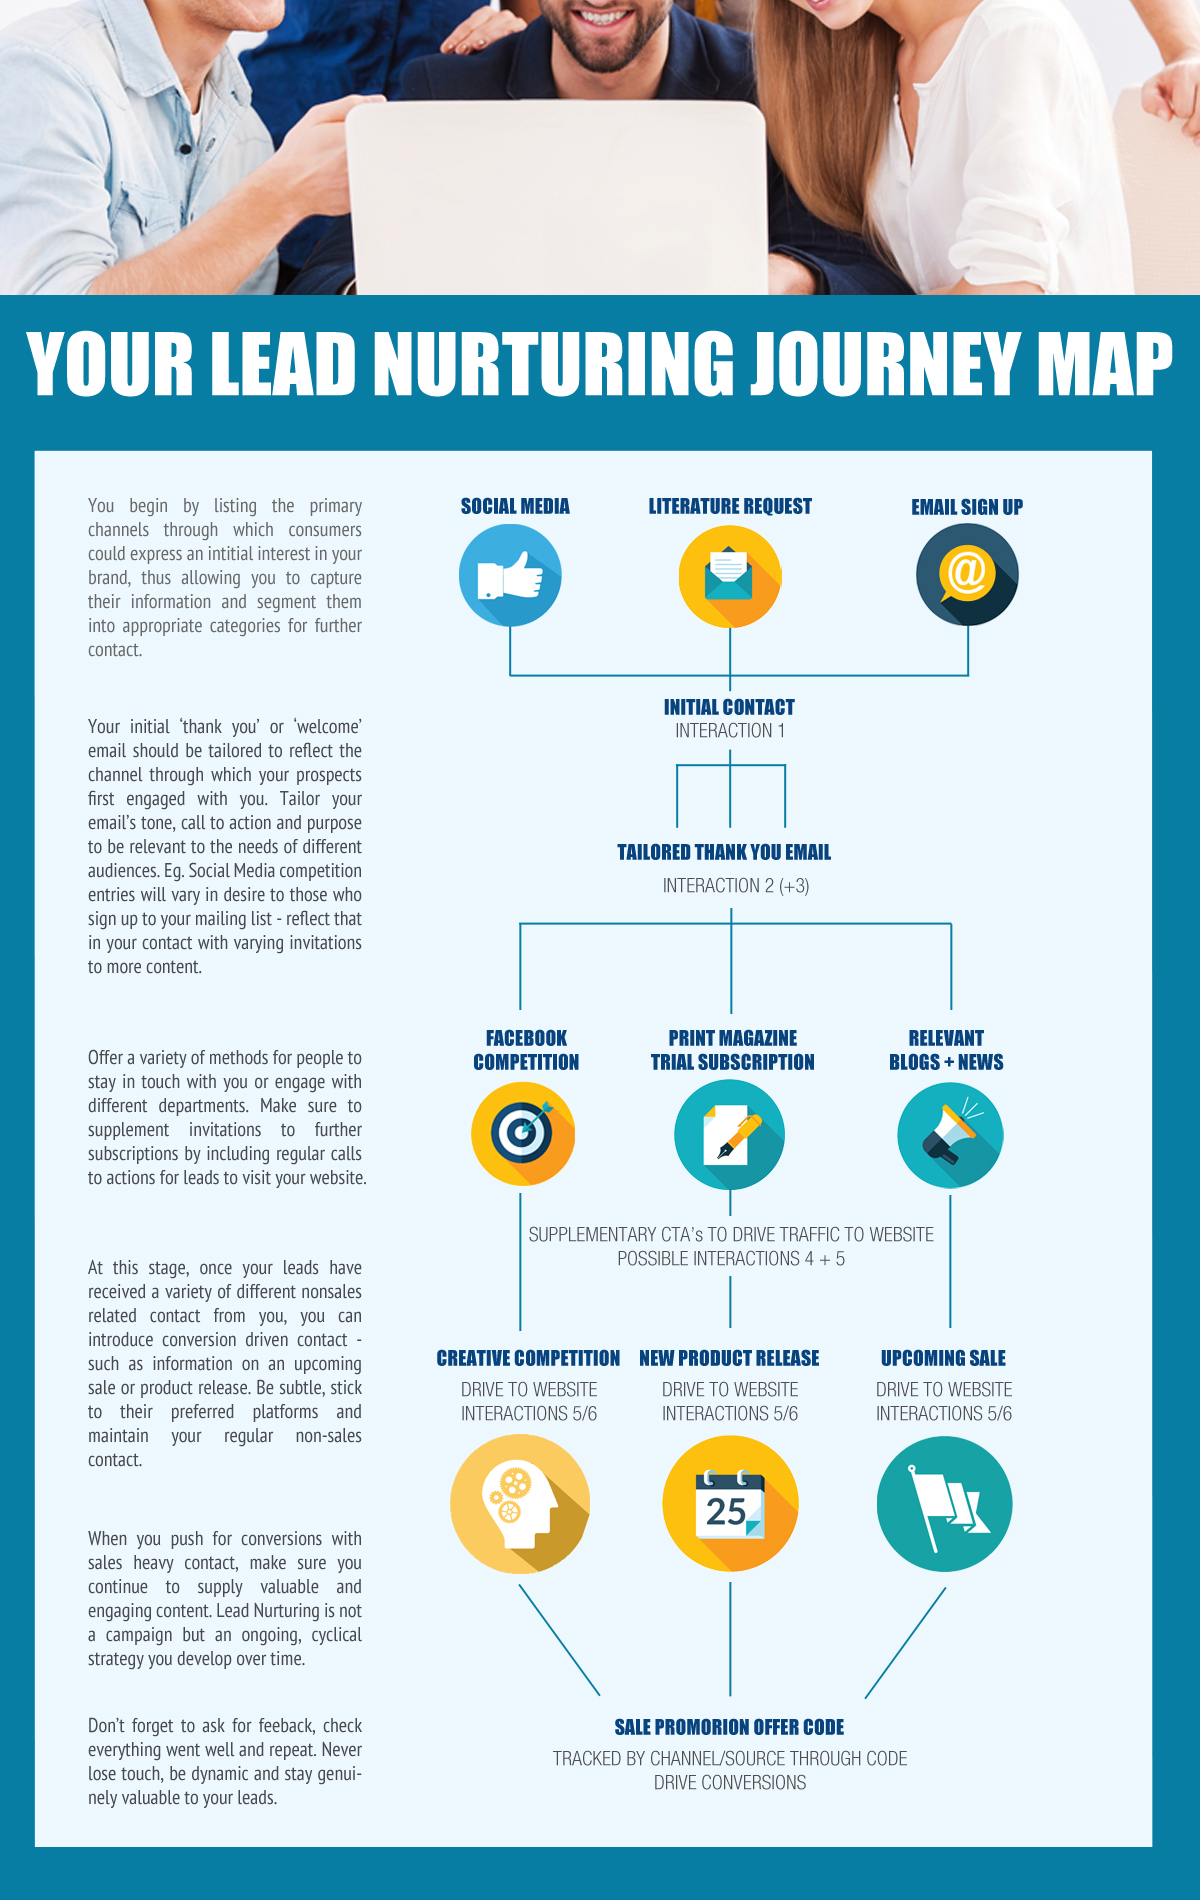 Lead Nurturing Consumer Journey infographic